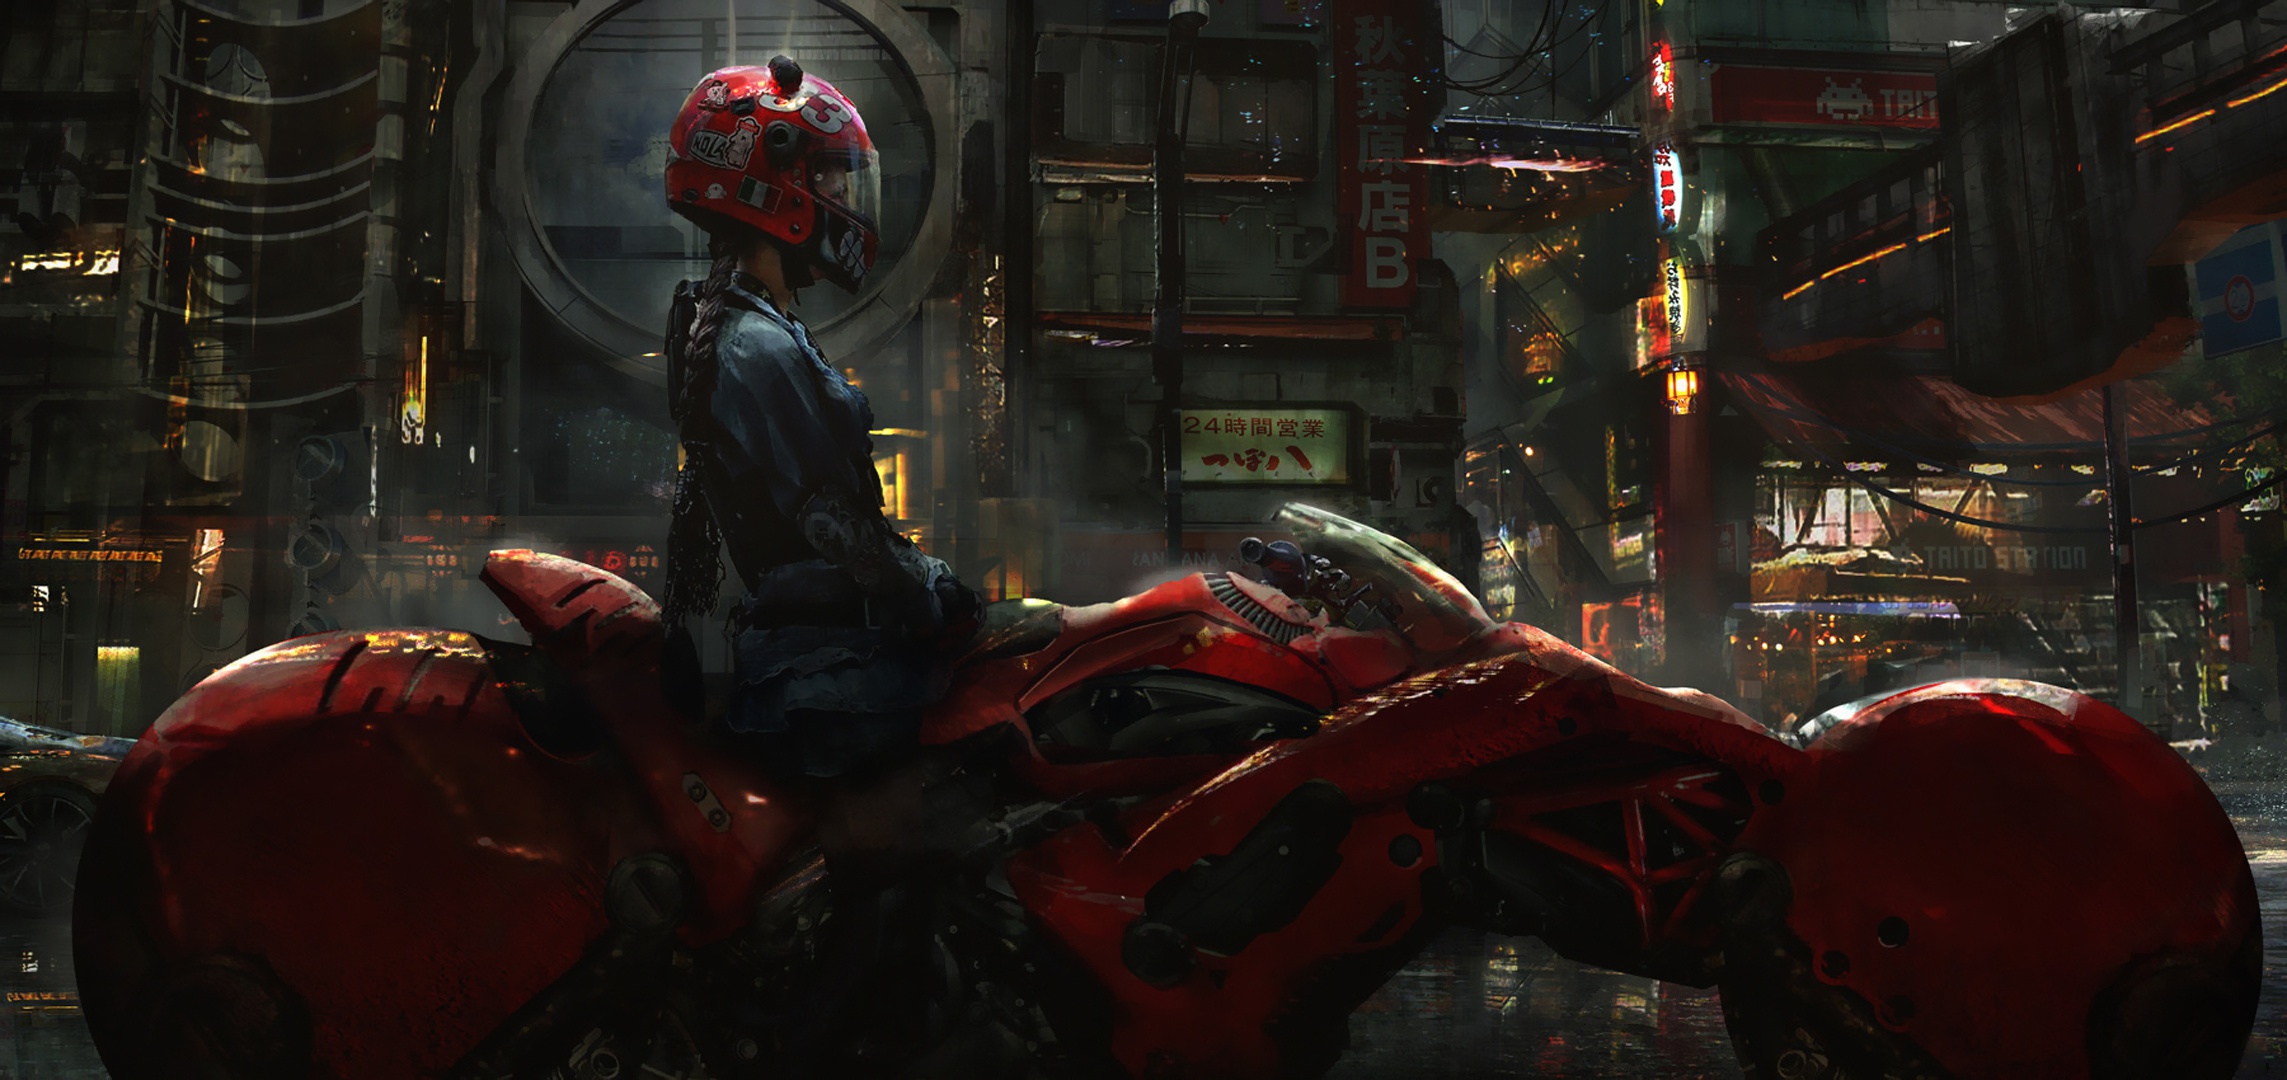 Cyberpunk Everyone Girl on Bike by Eddie Mendoza